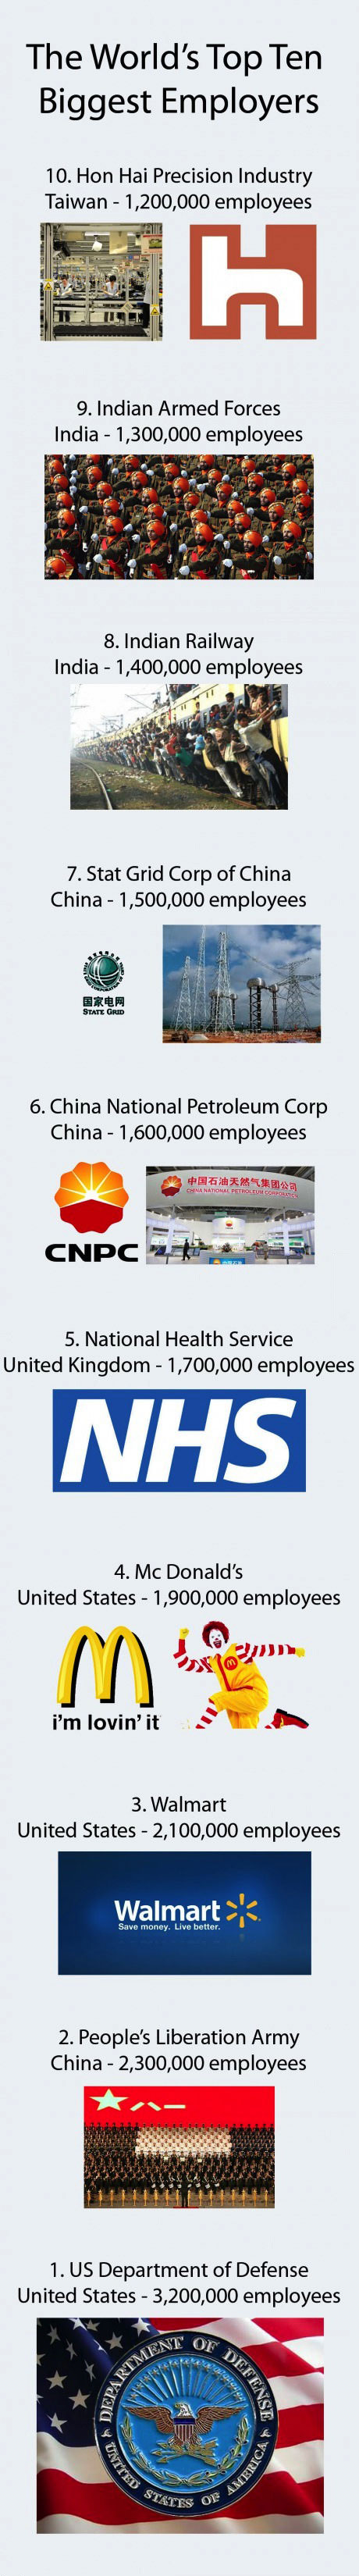 the world's top ten biggest employers